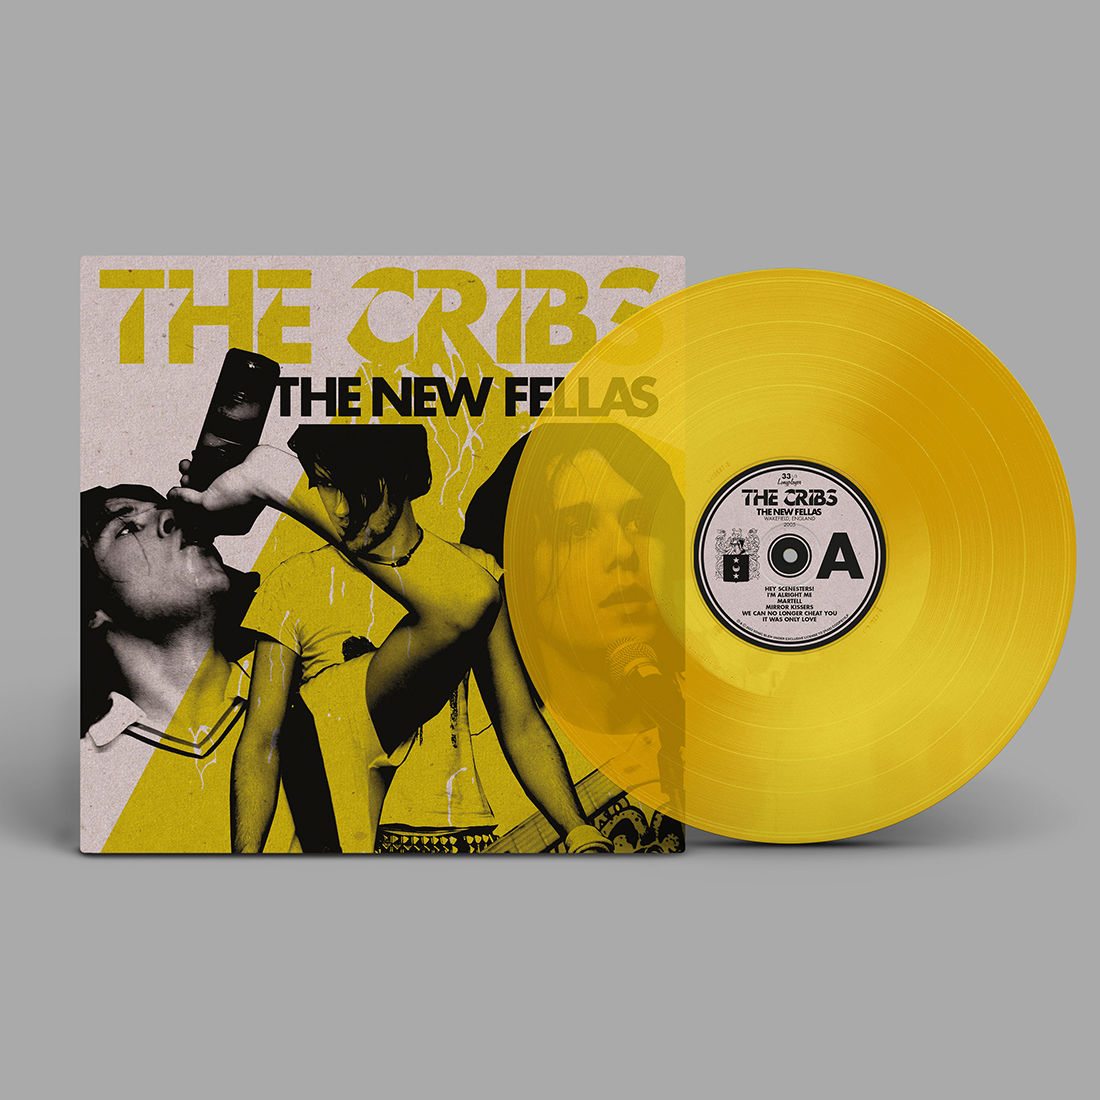 The New Fellas: Limited Yellow Transparent Vinyl LP